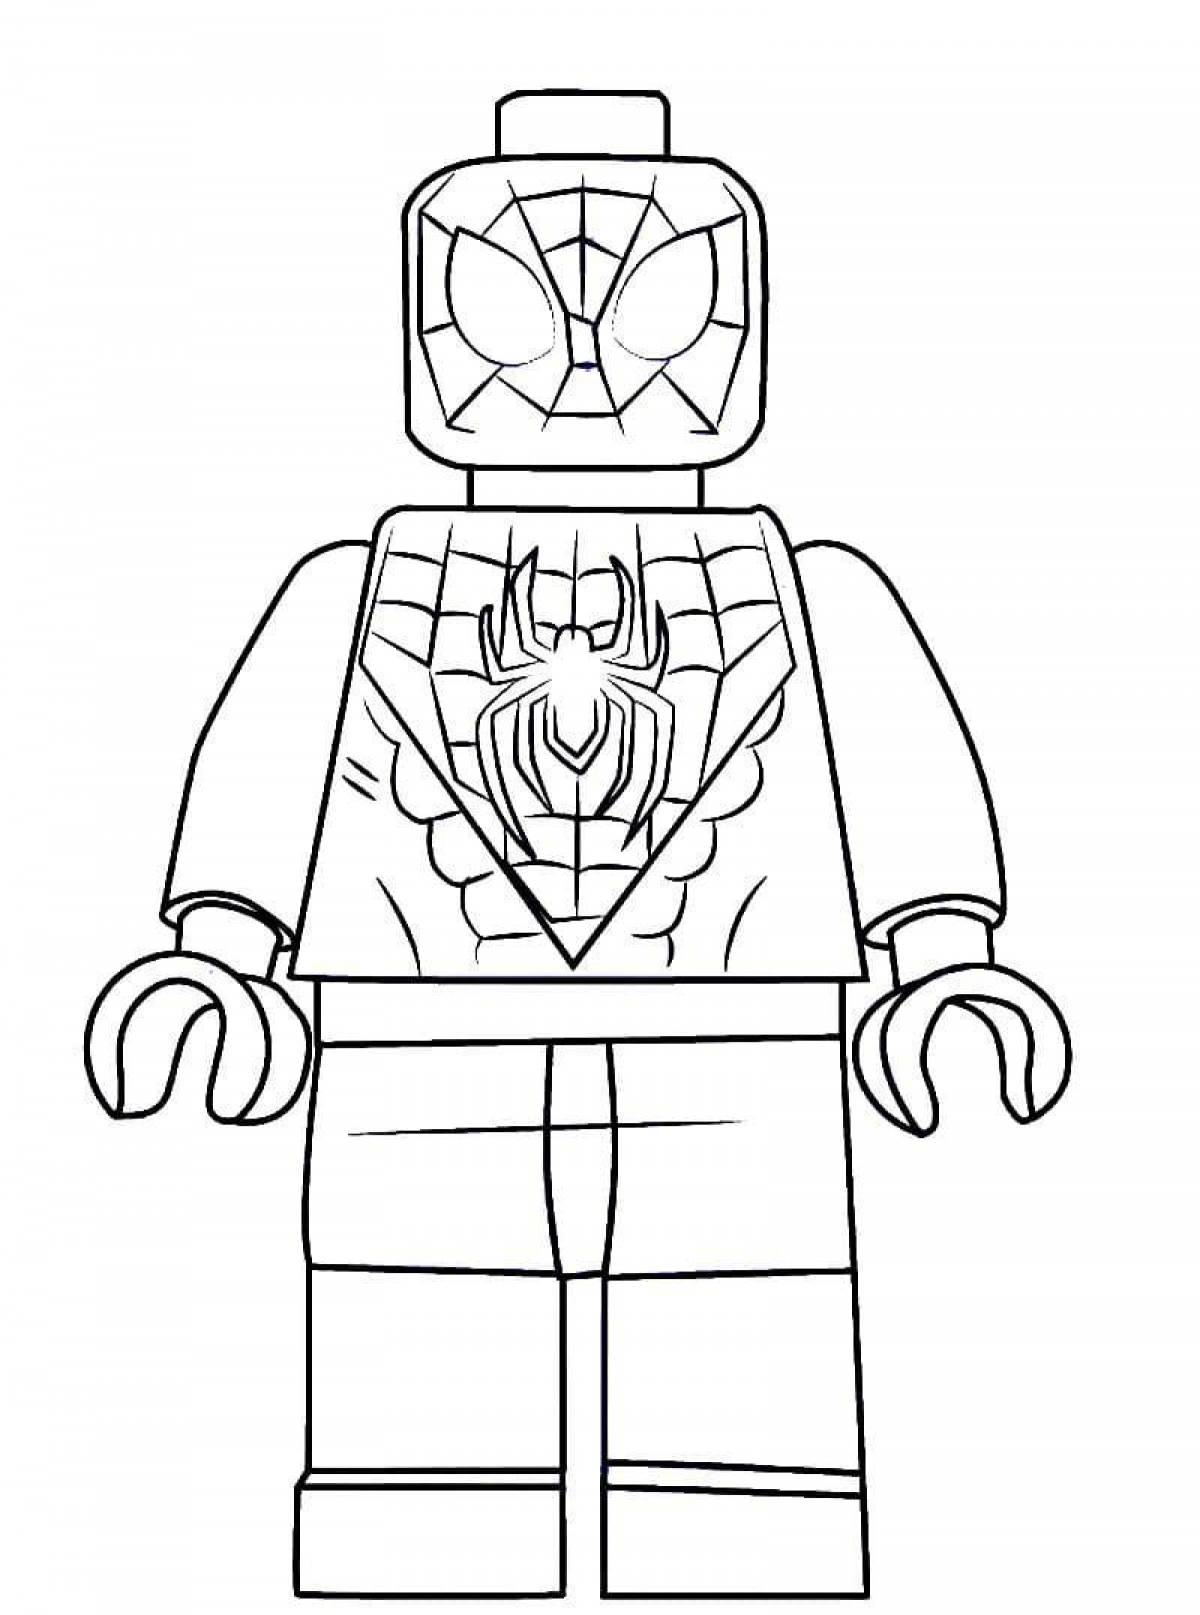 Adorable lego spider man coloring page